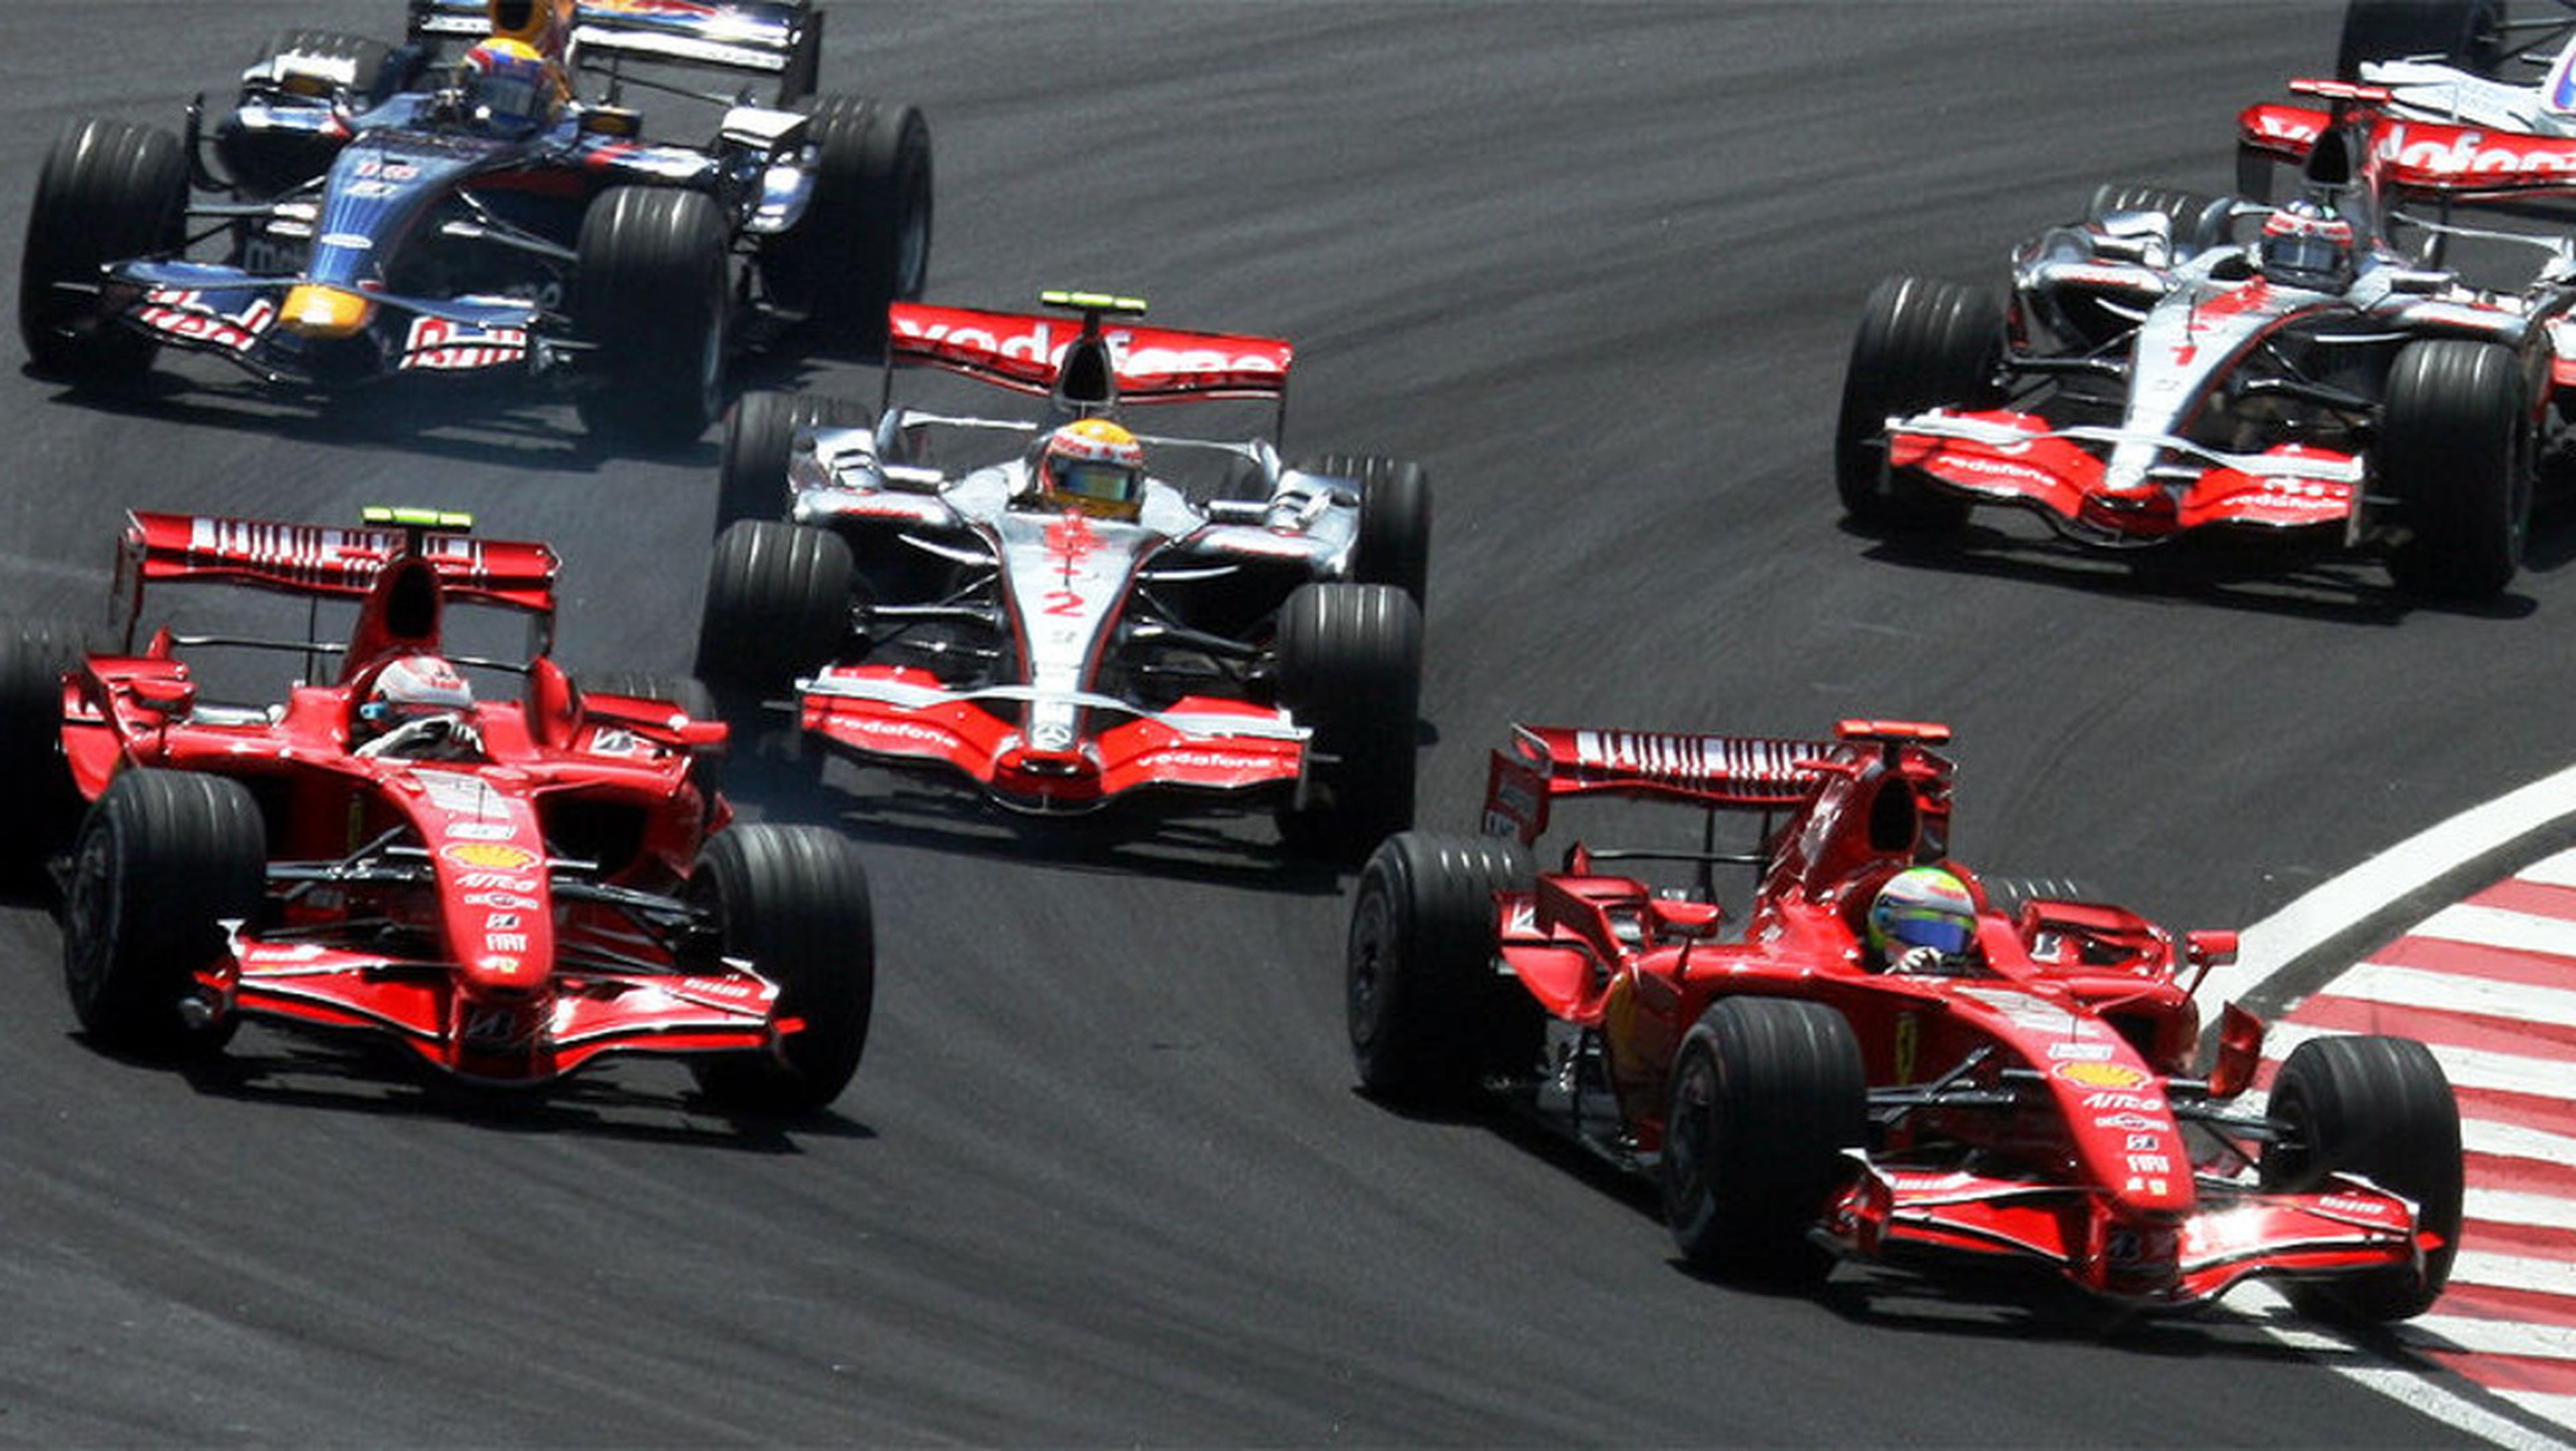 2007_Brazilian_GP: Kimi